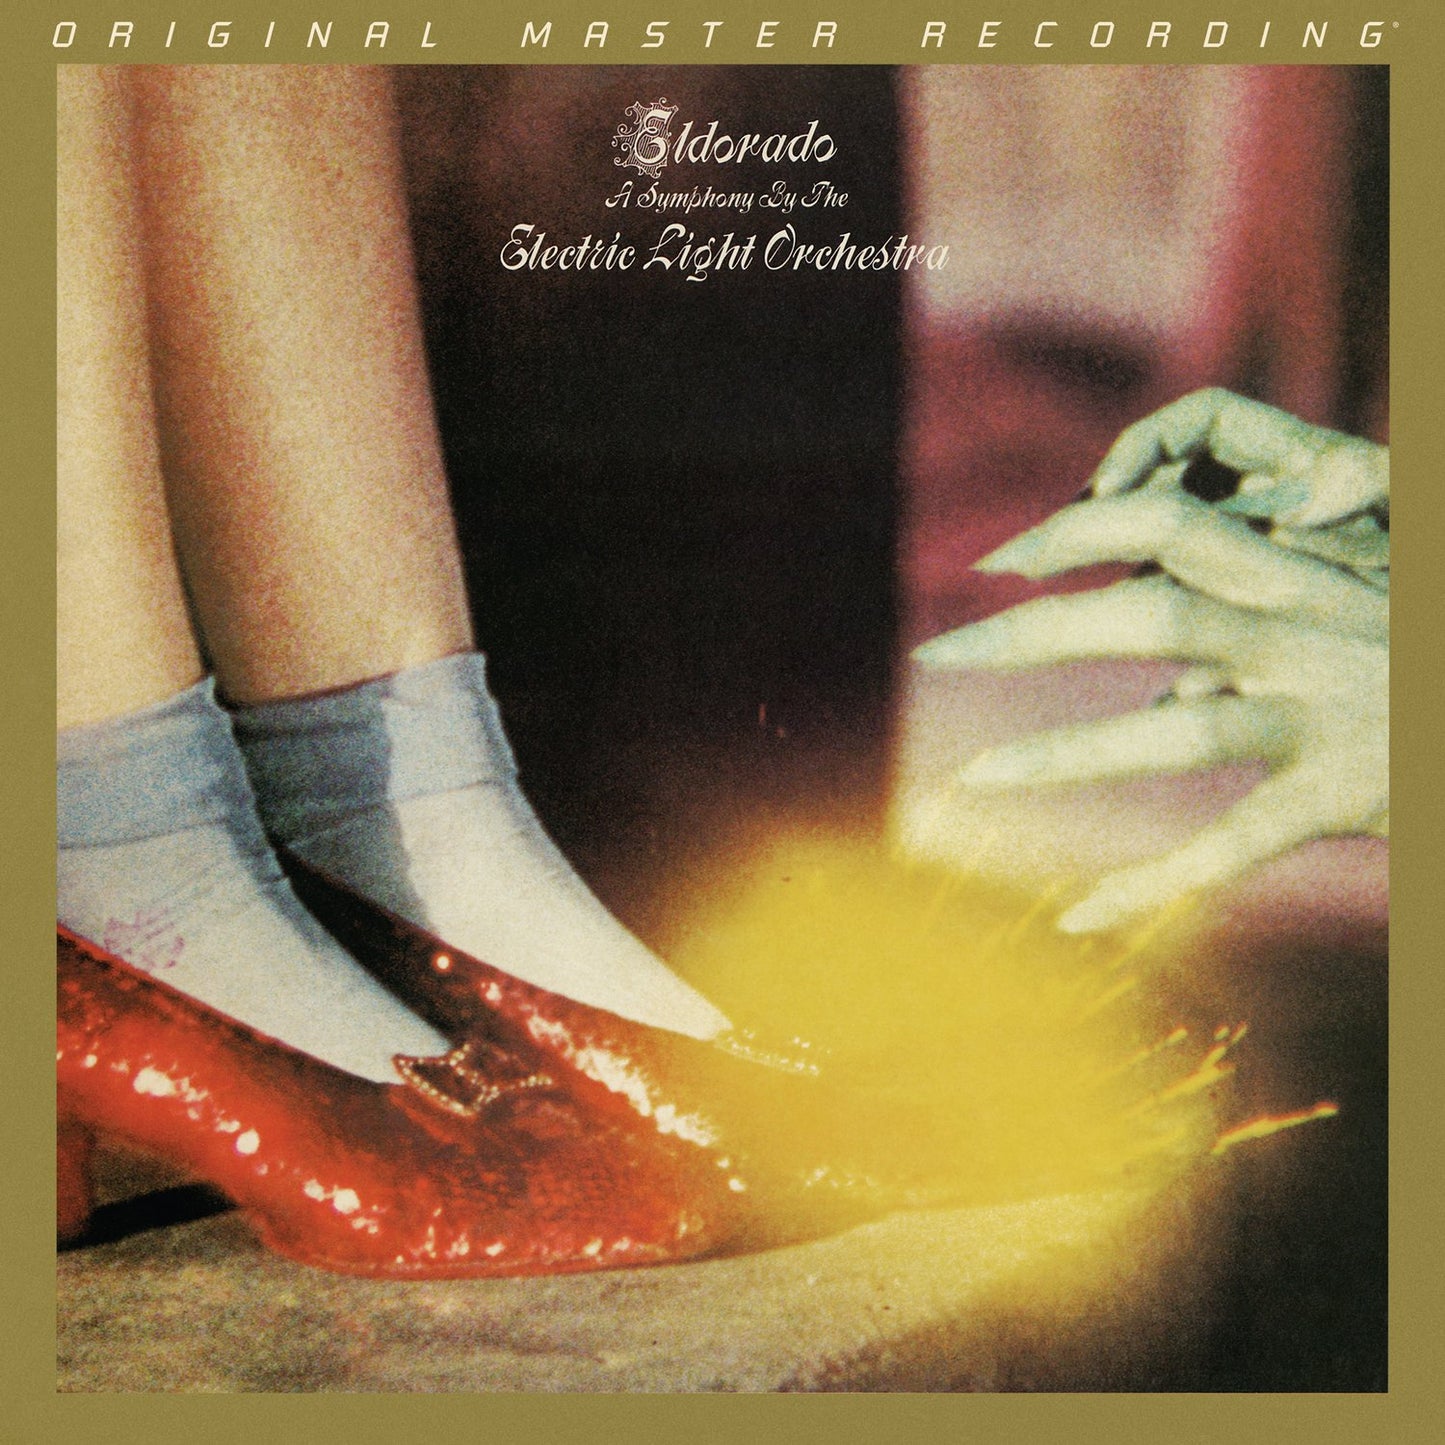 Electric Light Orchestra - Eldorado - MFSL Supervinyl LP